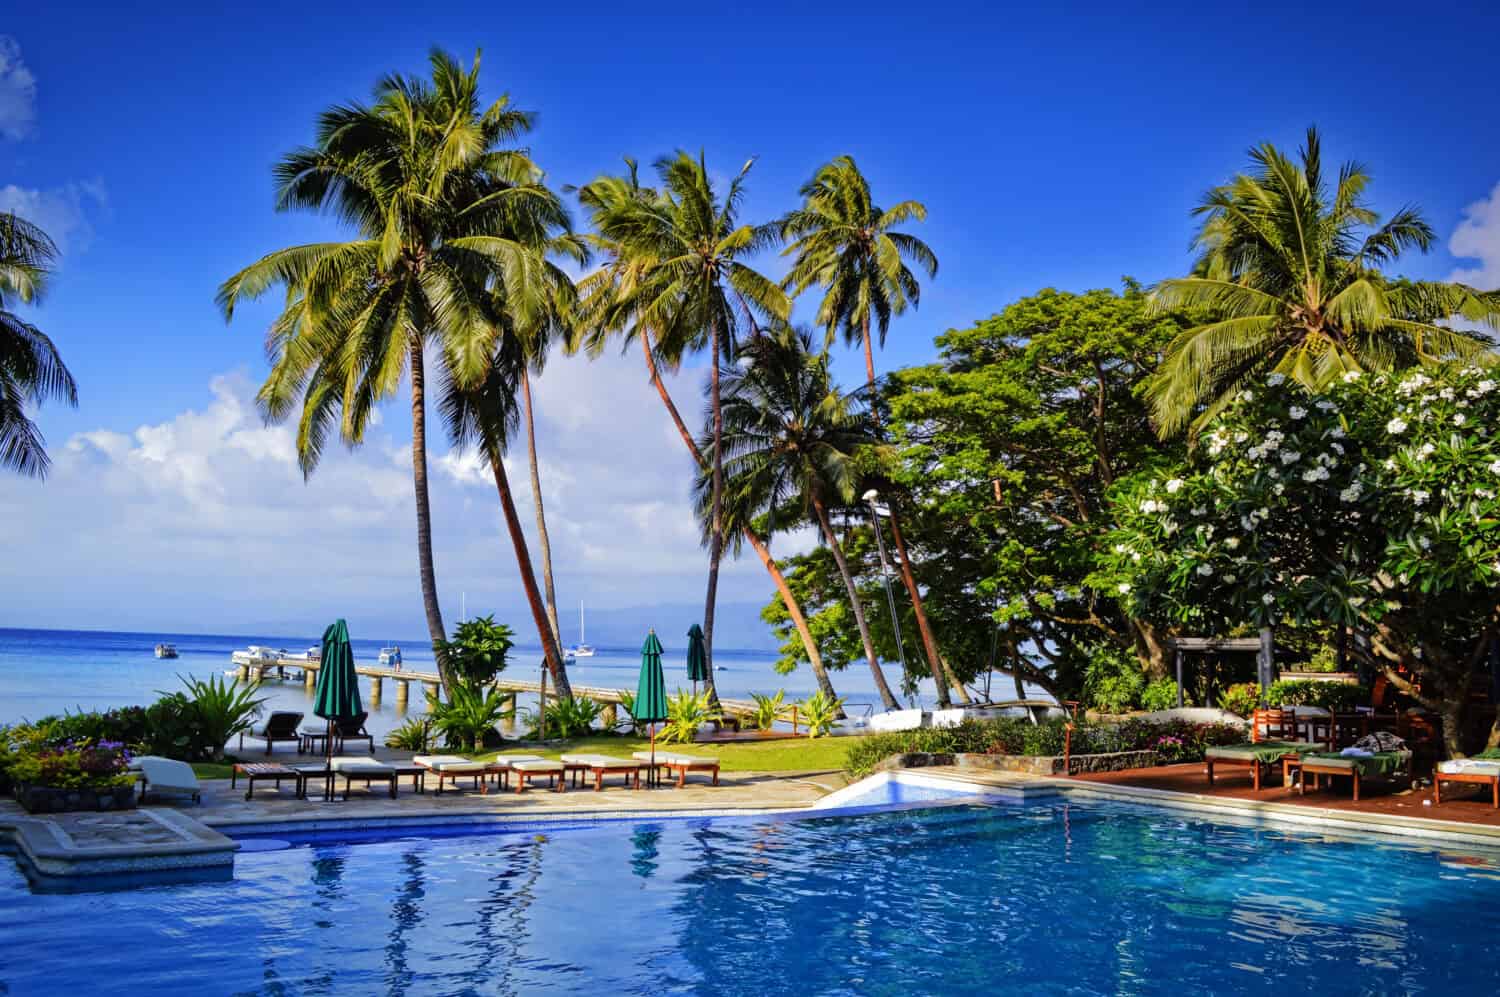 Paradise like resort pool in Fiji Islands